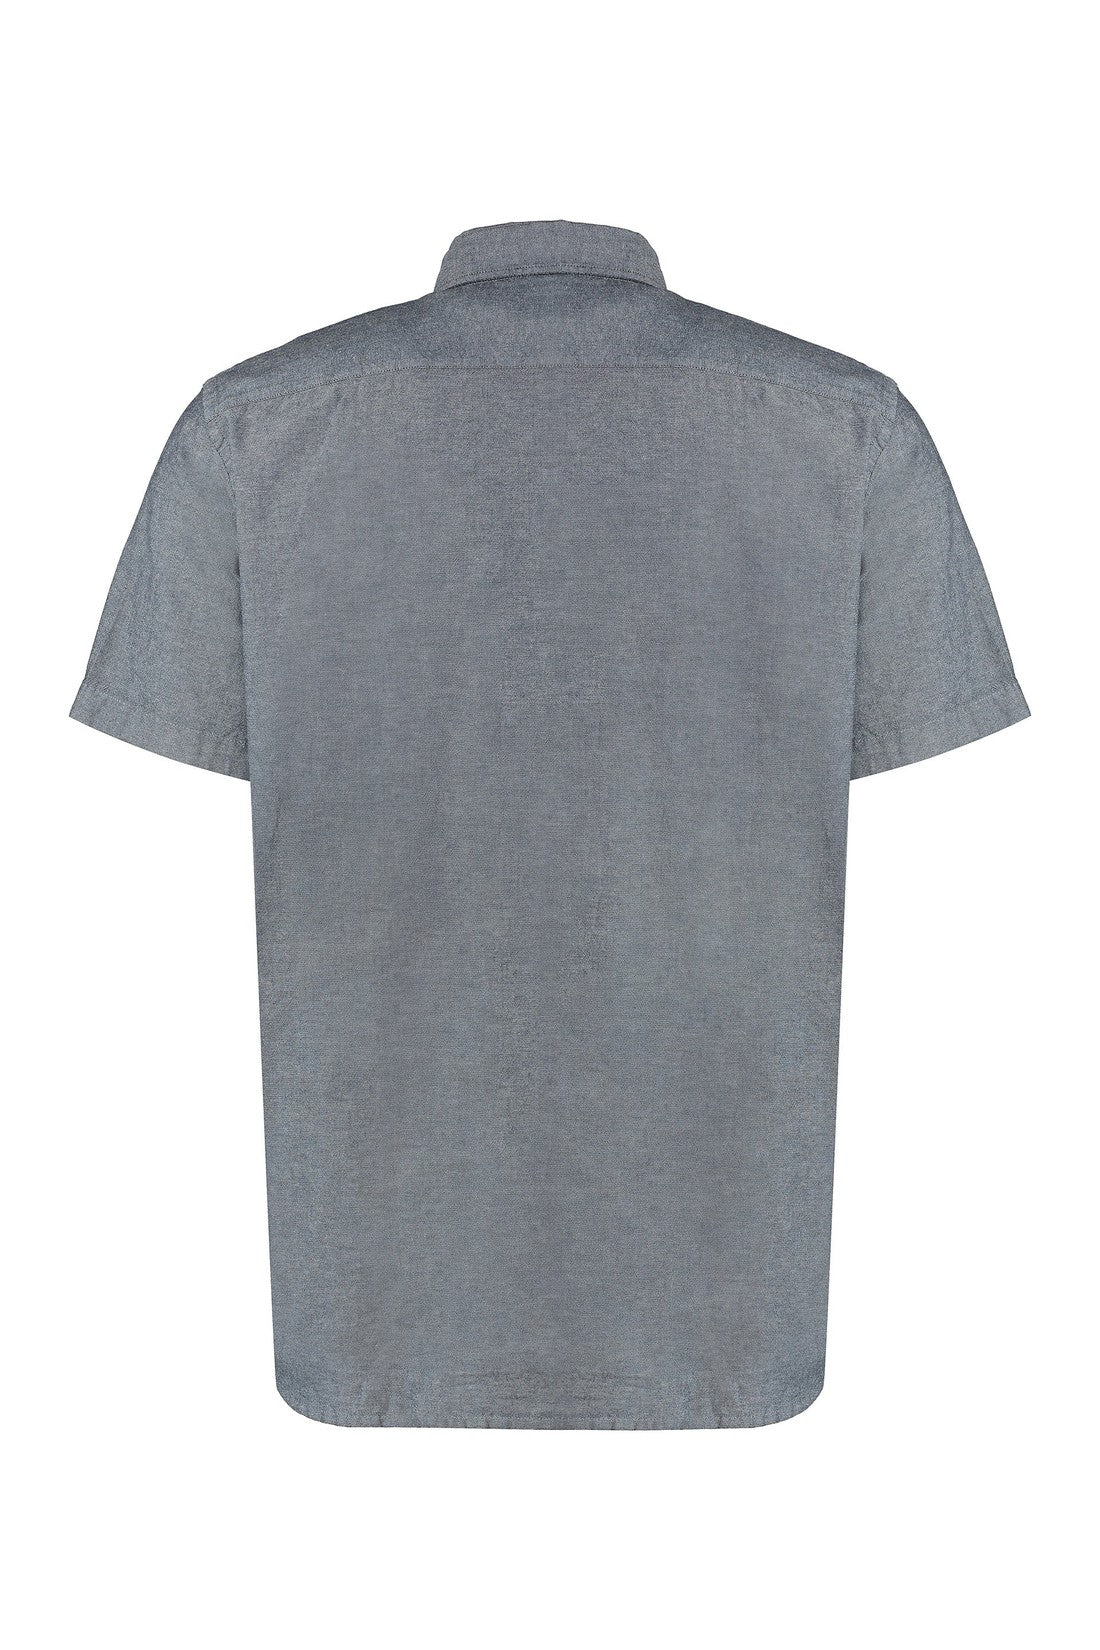 BOSS-OUTLET-SALE-Short sleeve cotton shirt-ARCHIVIST